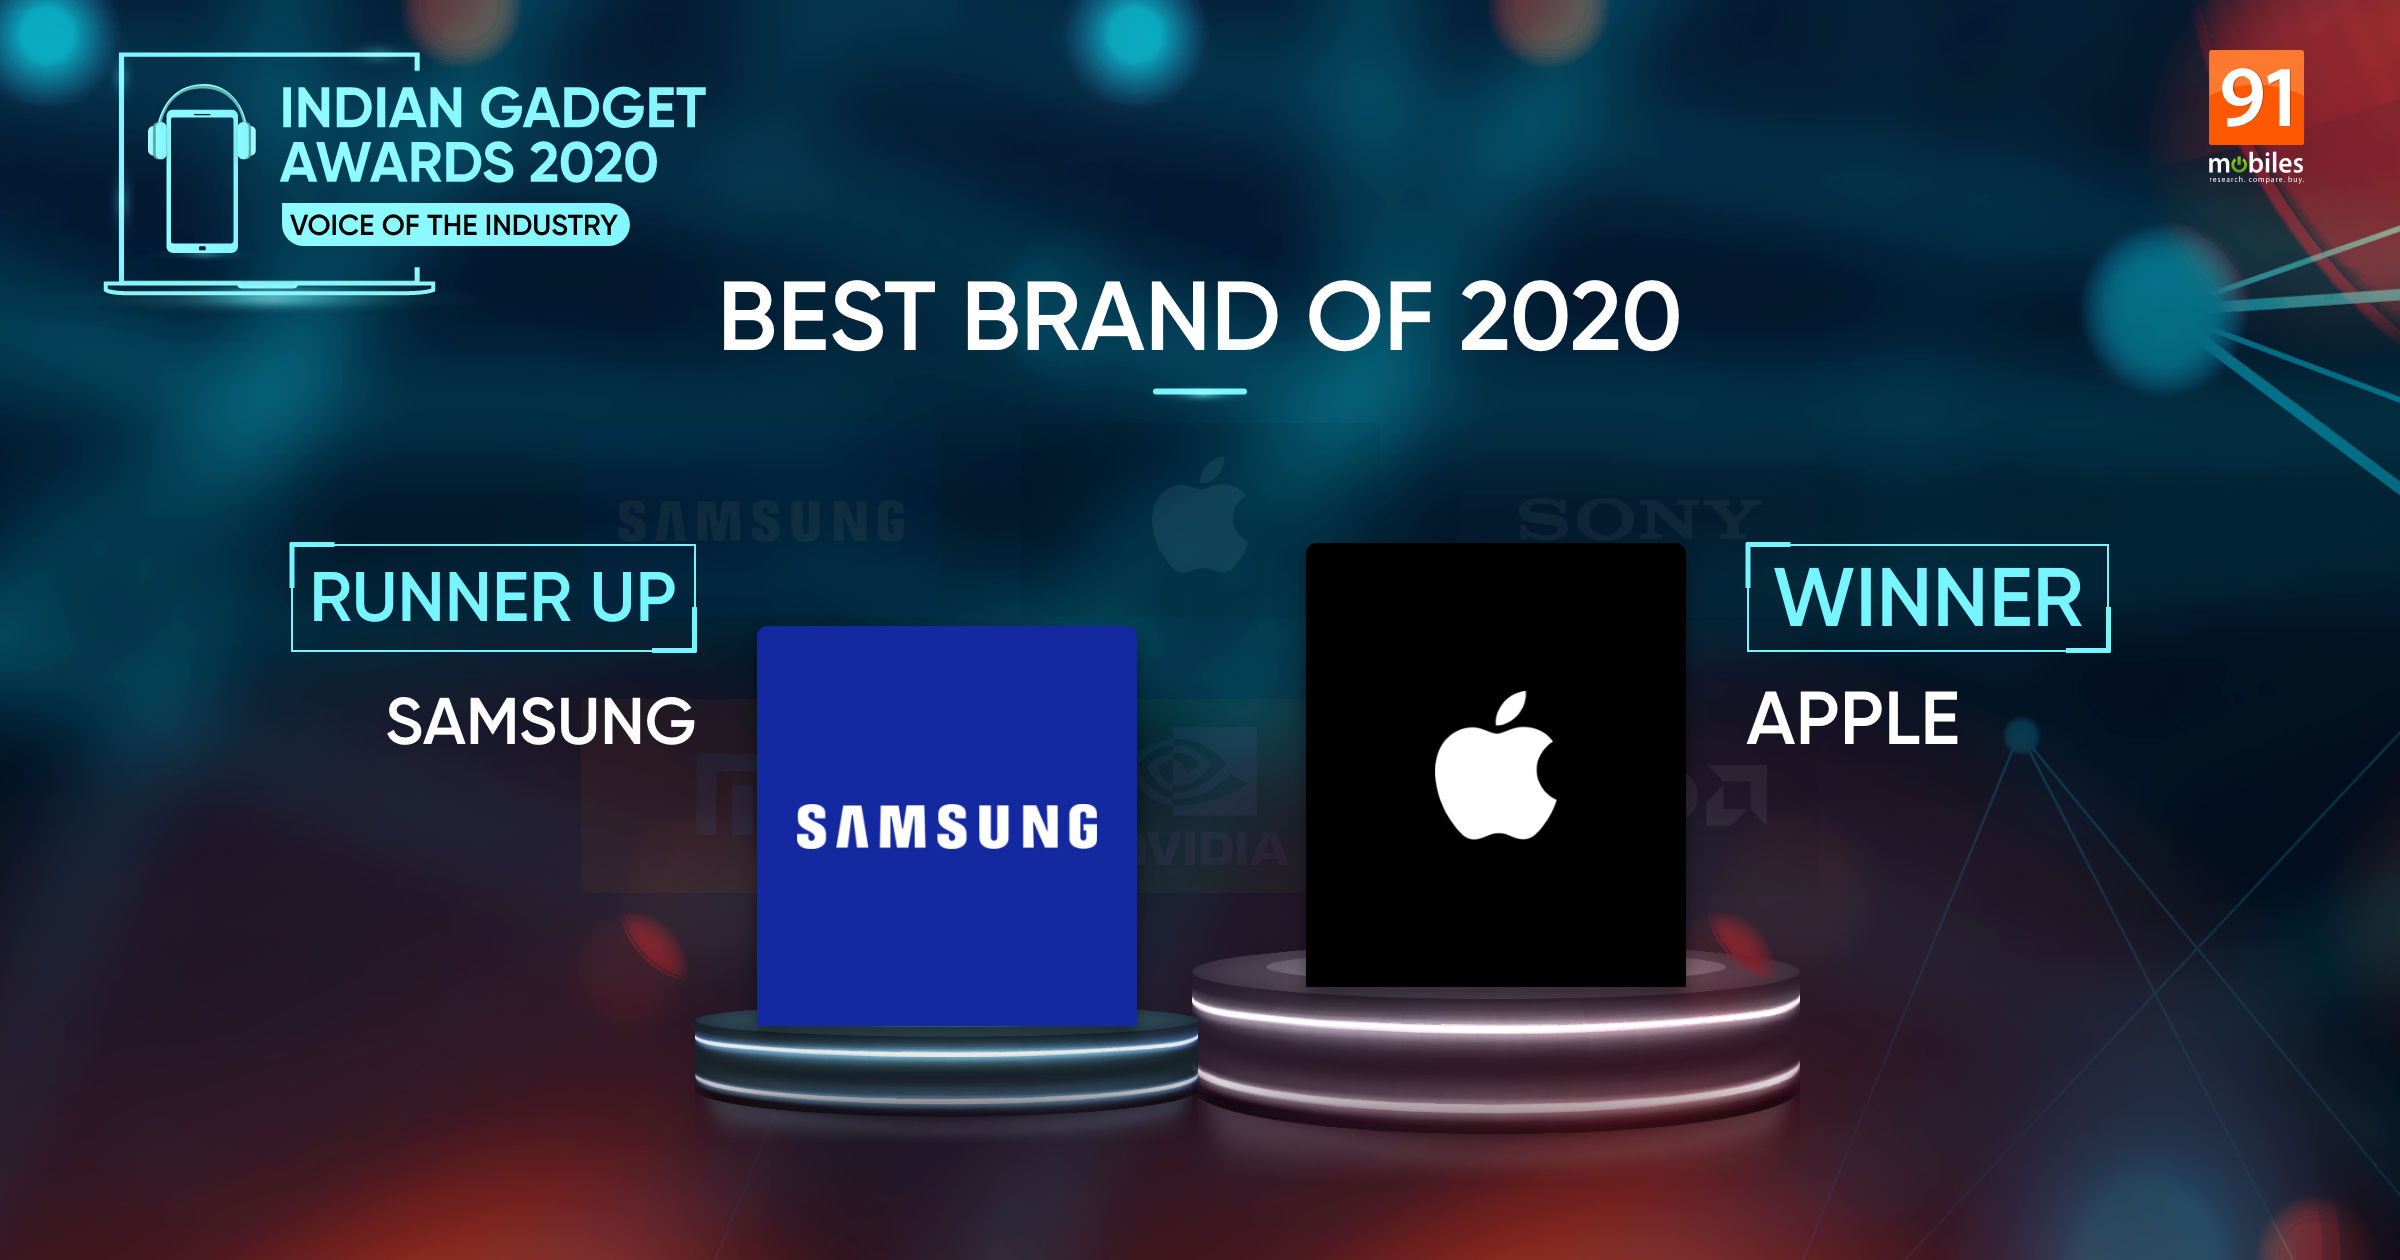 Indian Gadget Awards — Best Brand of 2020: it’s the old Apple vs Samsung debate again